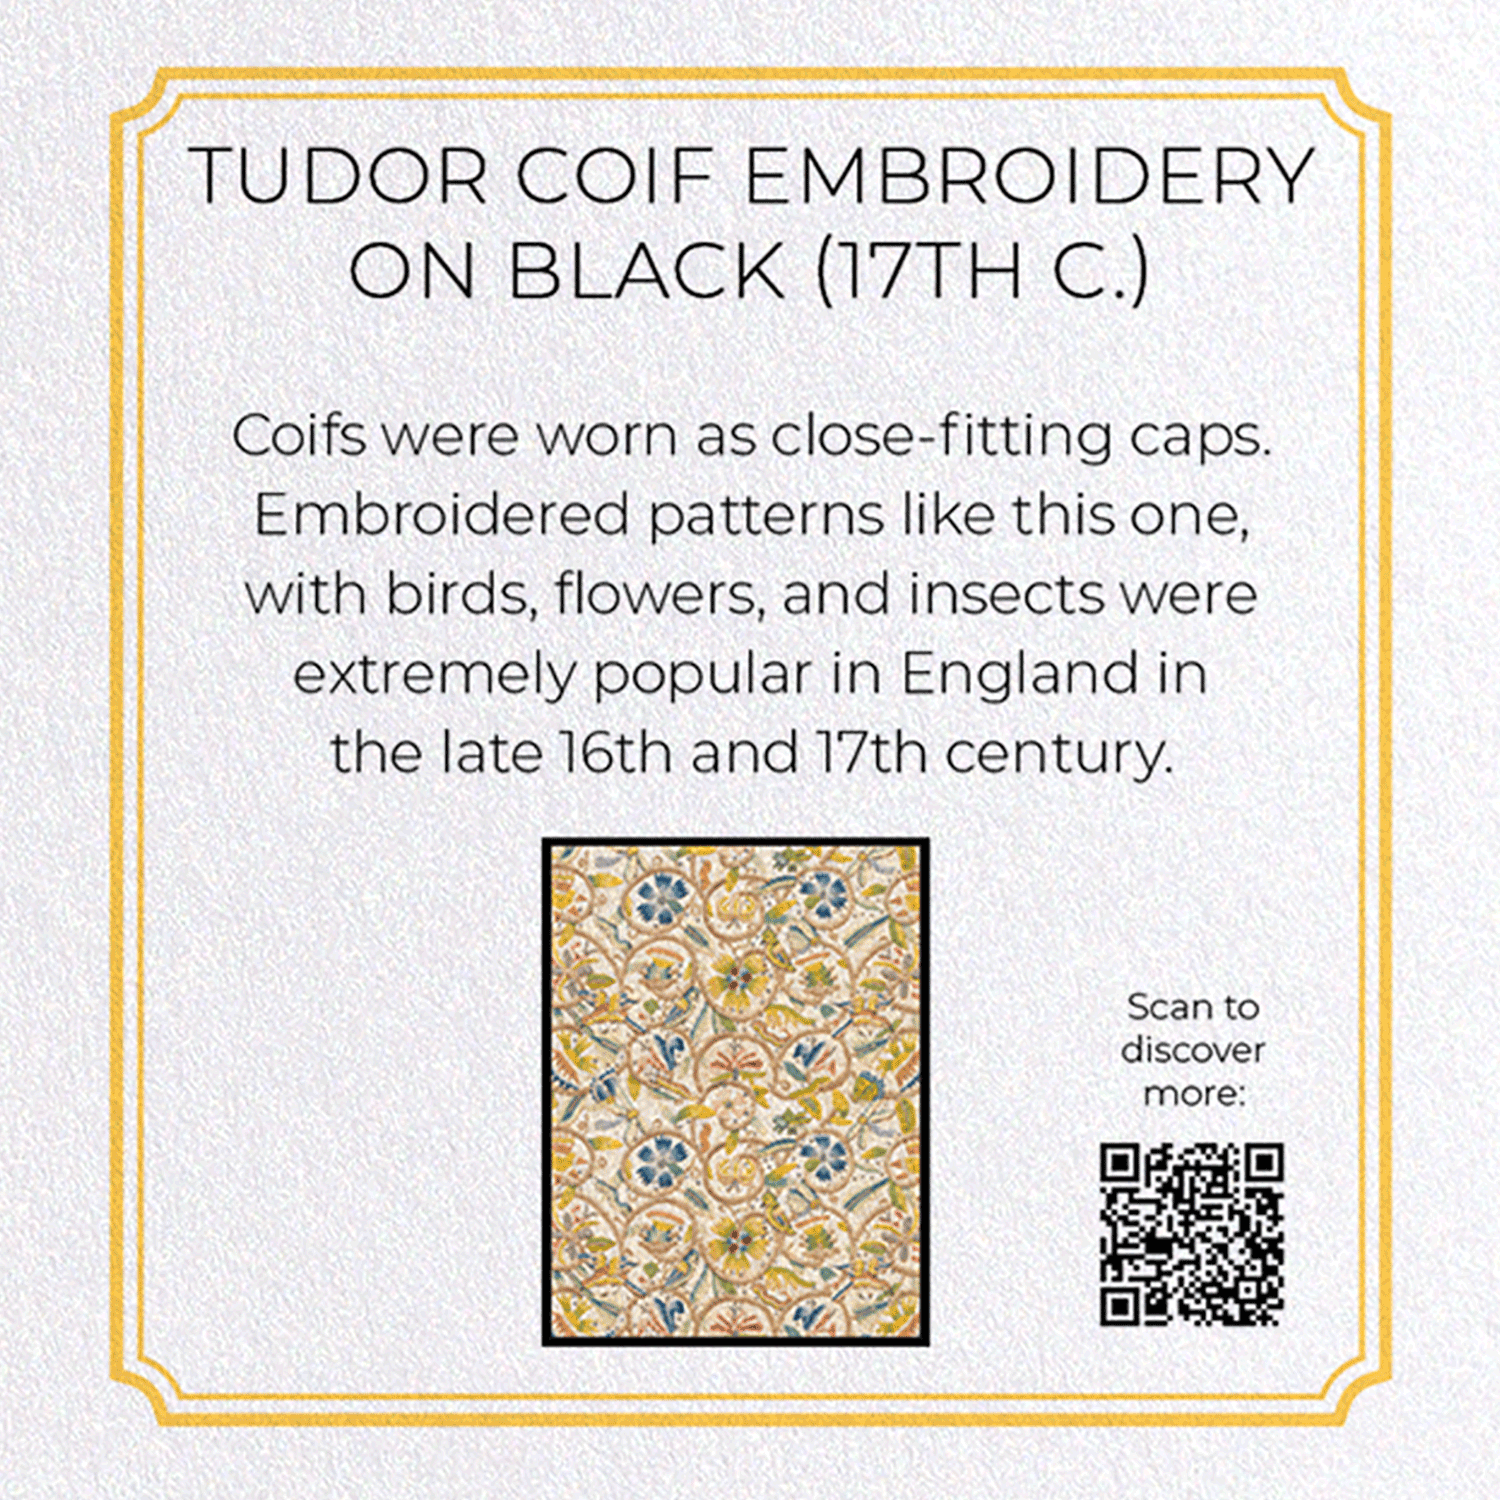 TUDOR COIF EMBROIDERY ON BLACK (17TH C.)